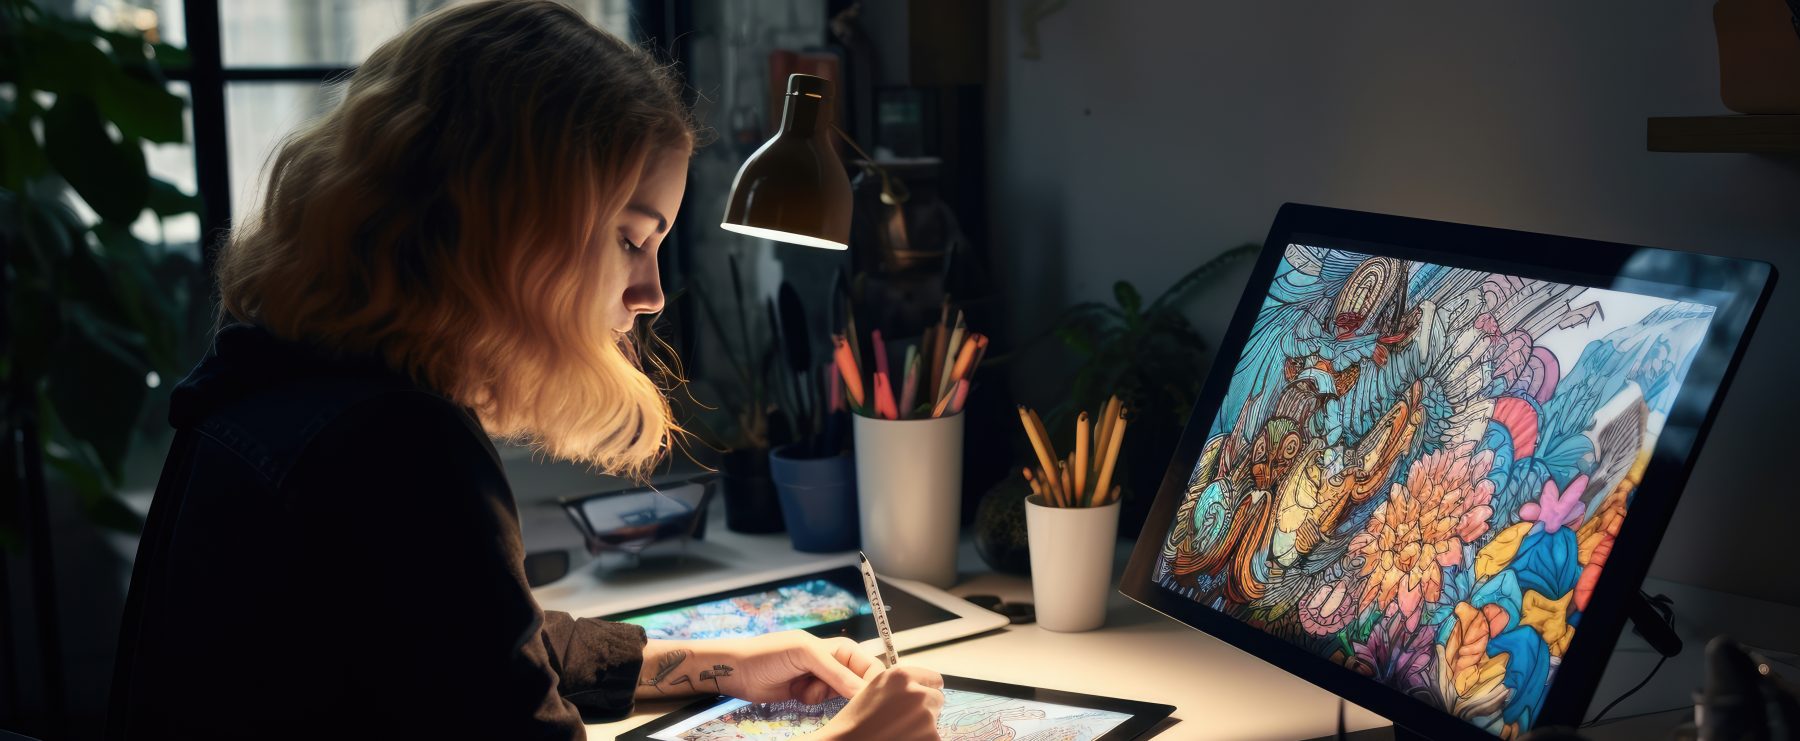 A digital artist creates a design on the computer.